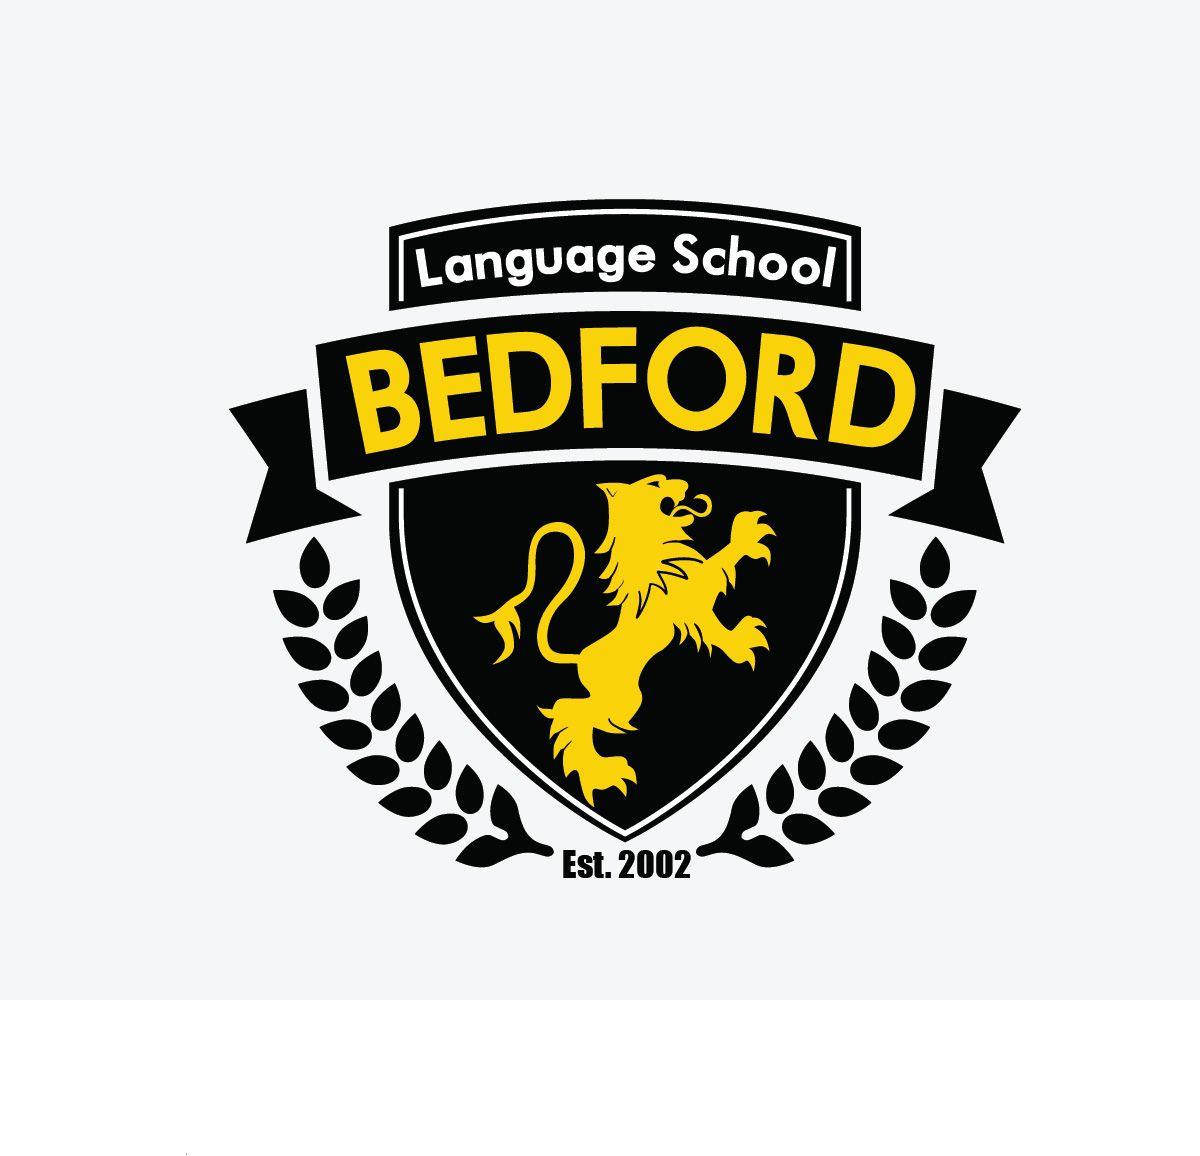 Bedford Logo - Bold, Professional, Logistic Logo Design for Bedford Language School ...